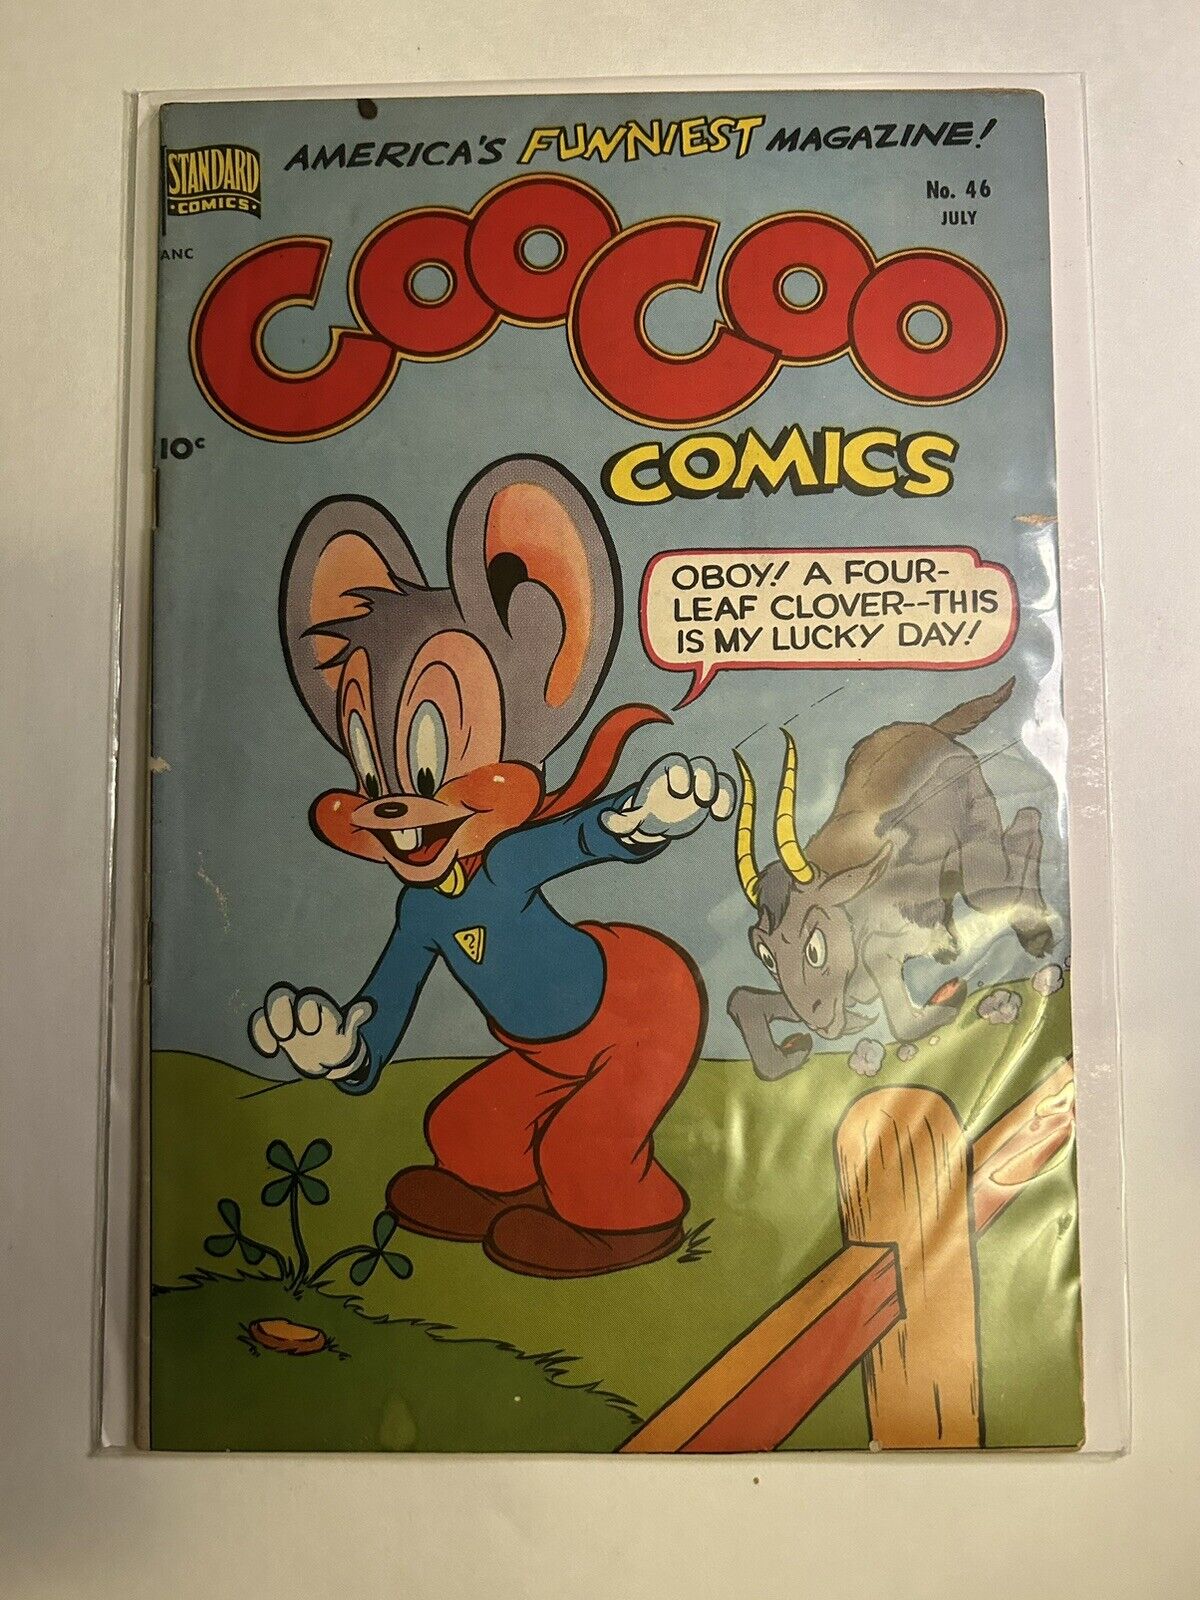 Coo Coo Comics #46 (1949) GD/VG Standard Comics Two Early Frank Frazetta Pieces